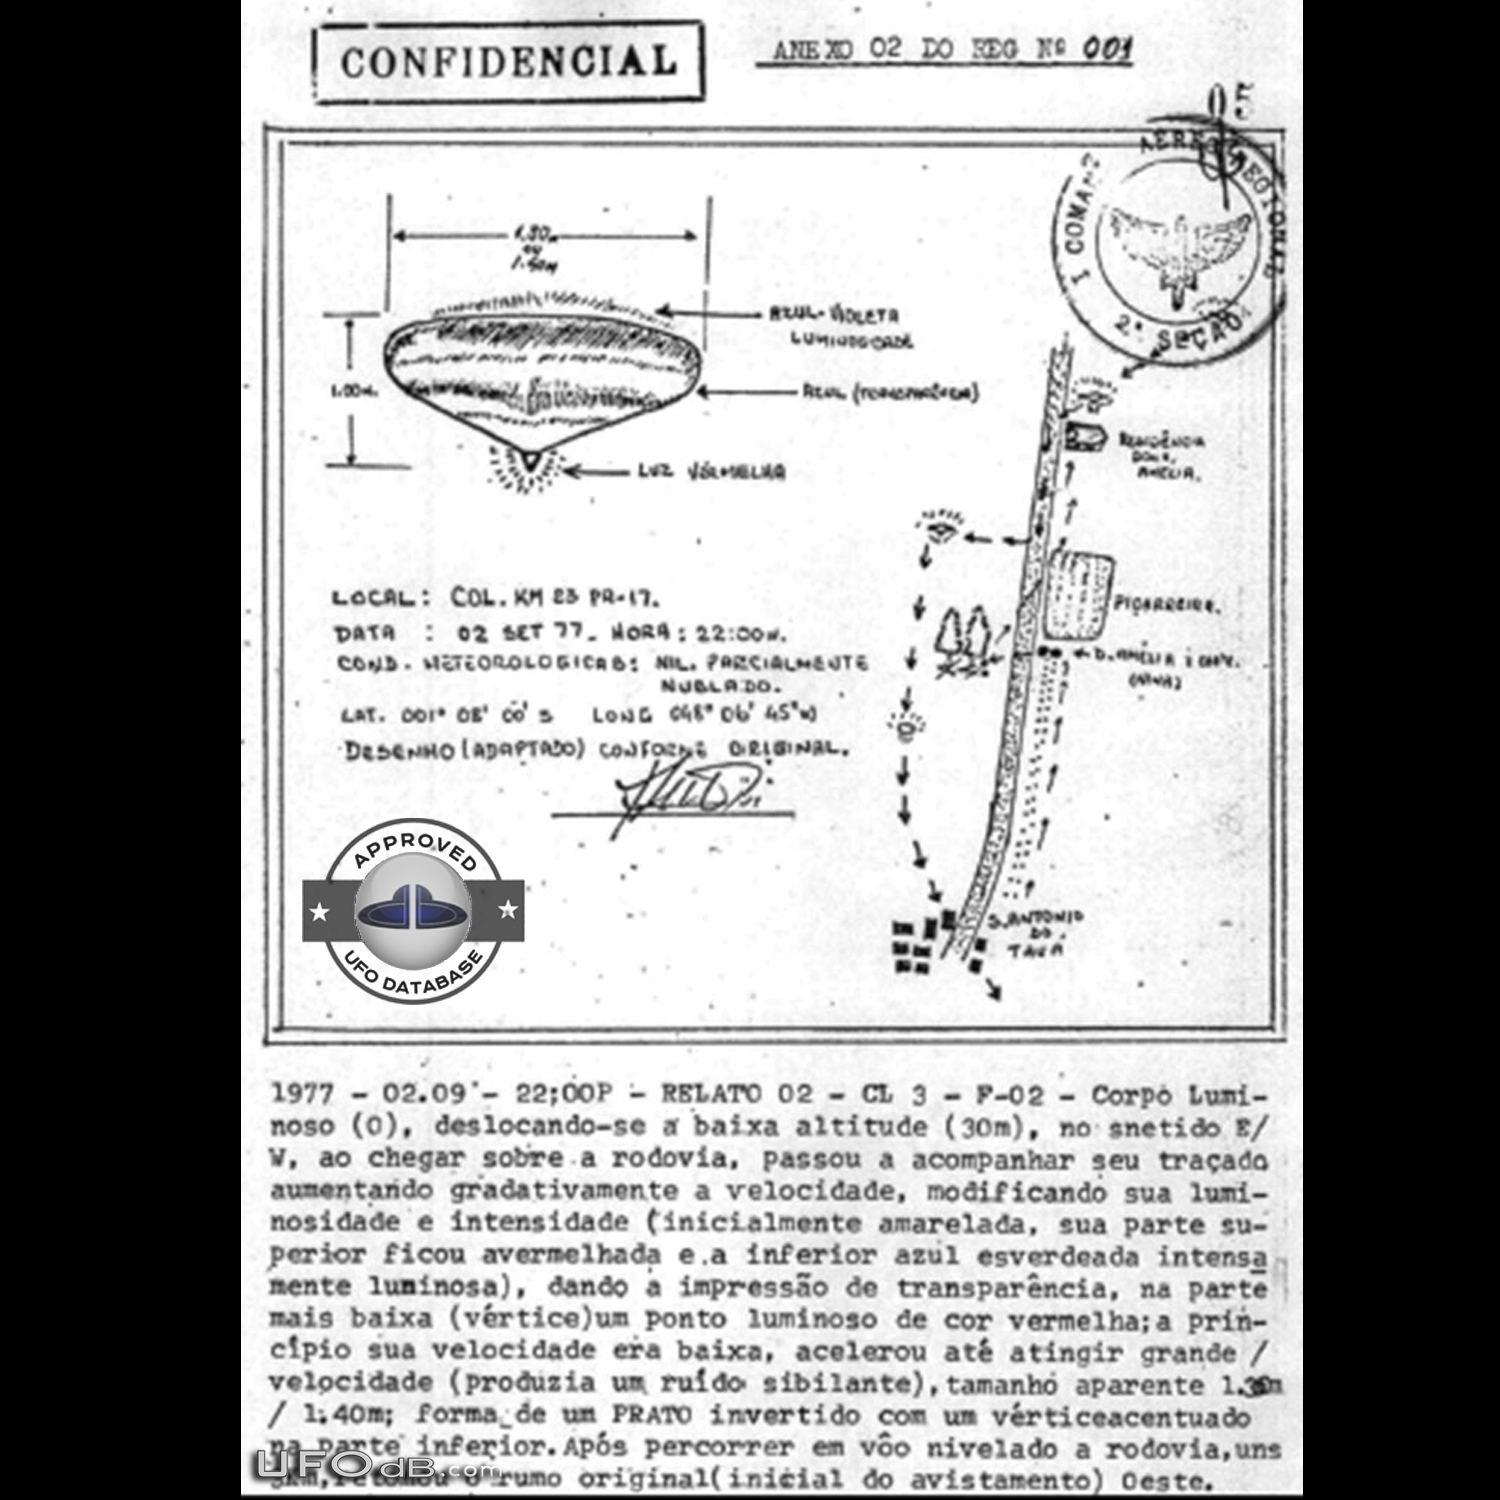 Famous 1977 Brazilian Colares UFO Flap - Huge Mass UFO sightings UFO Picture #553-9